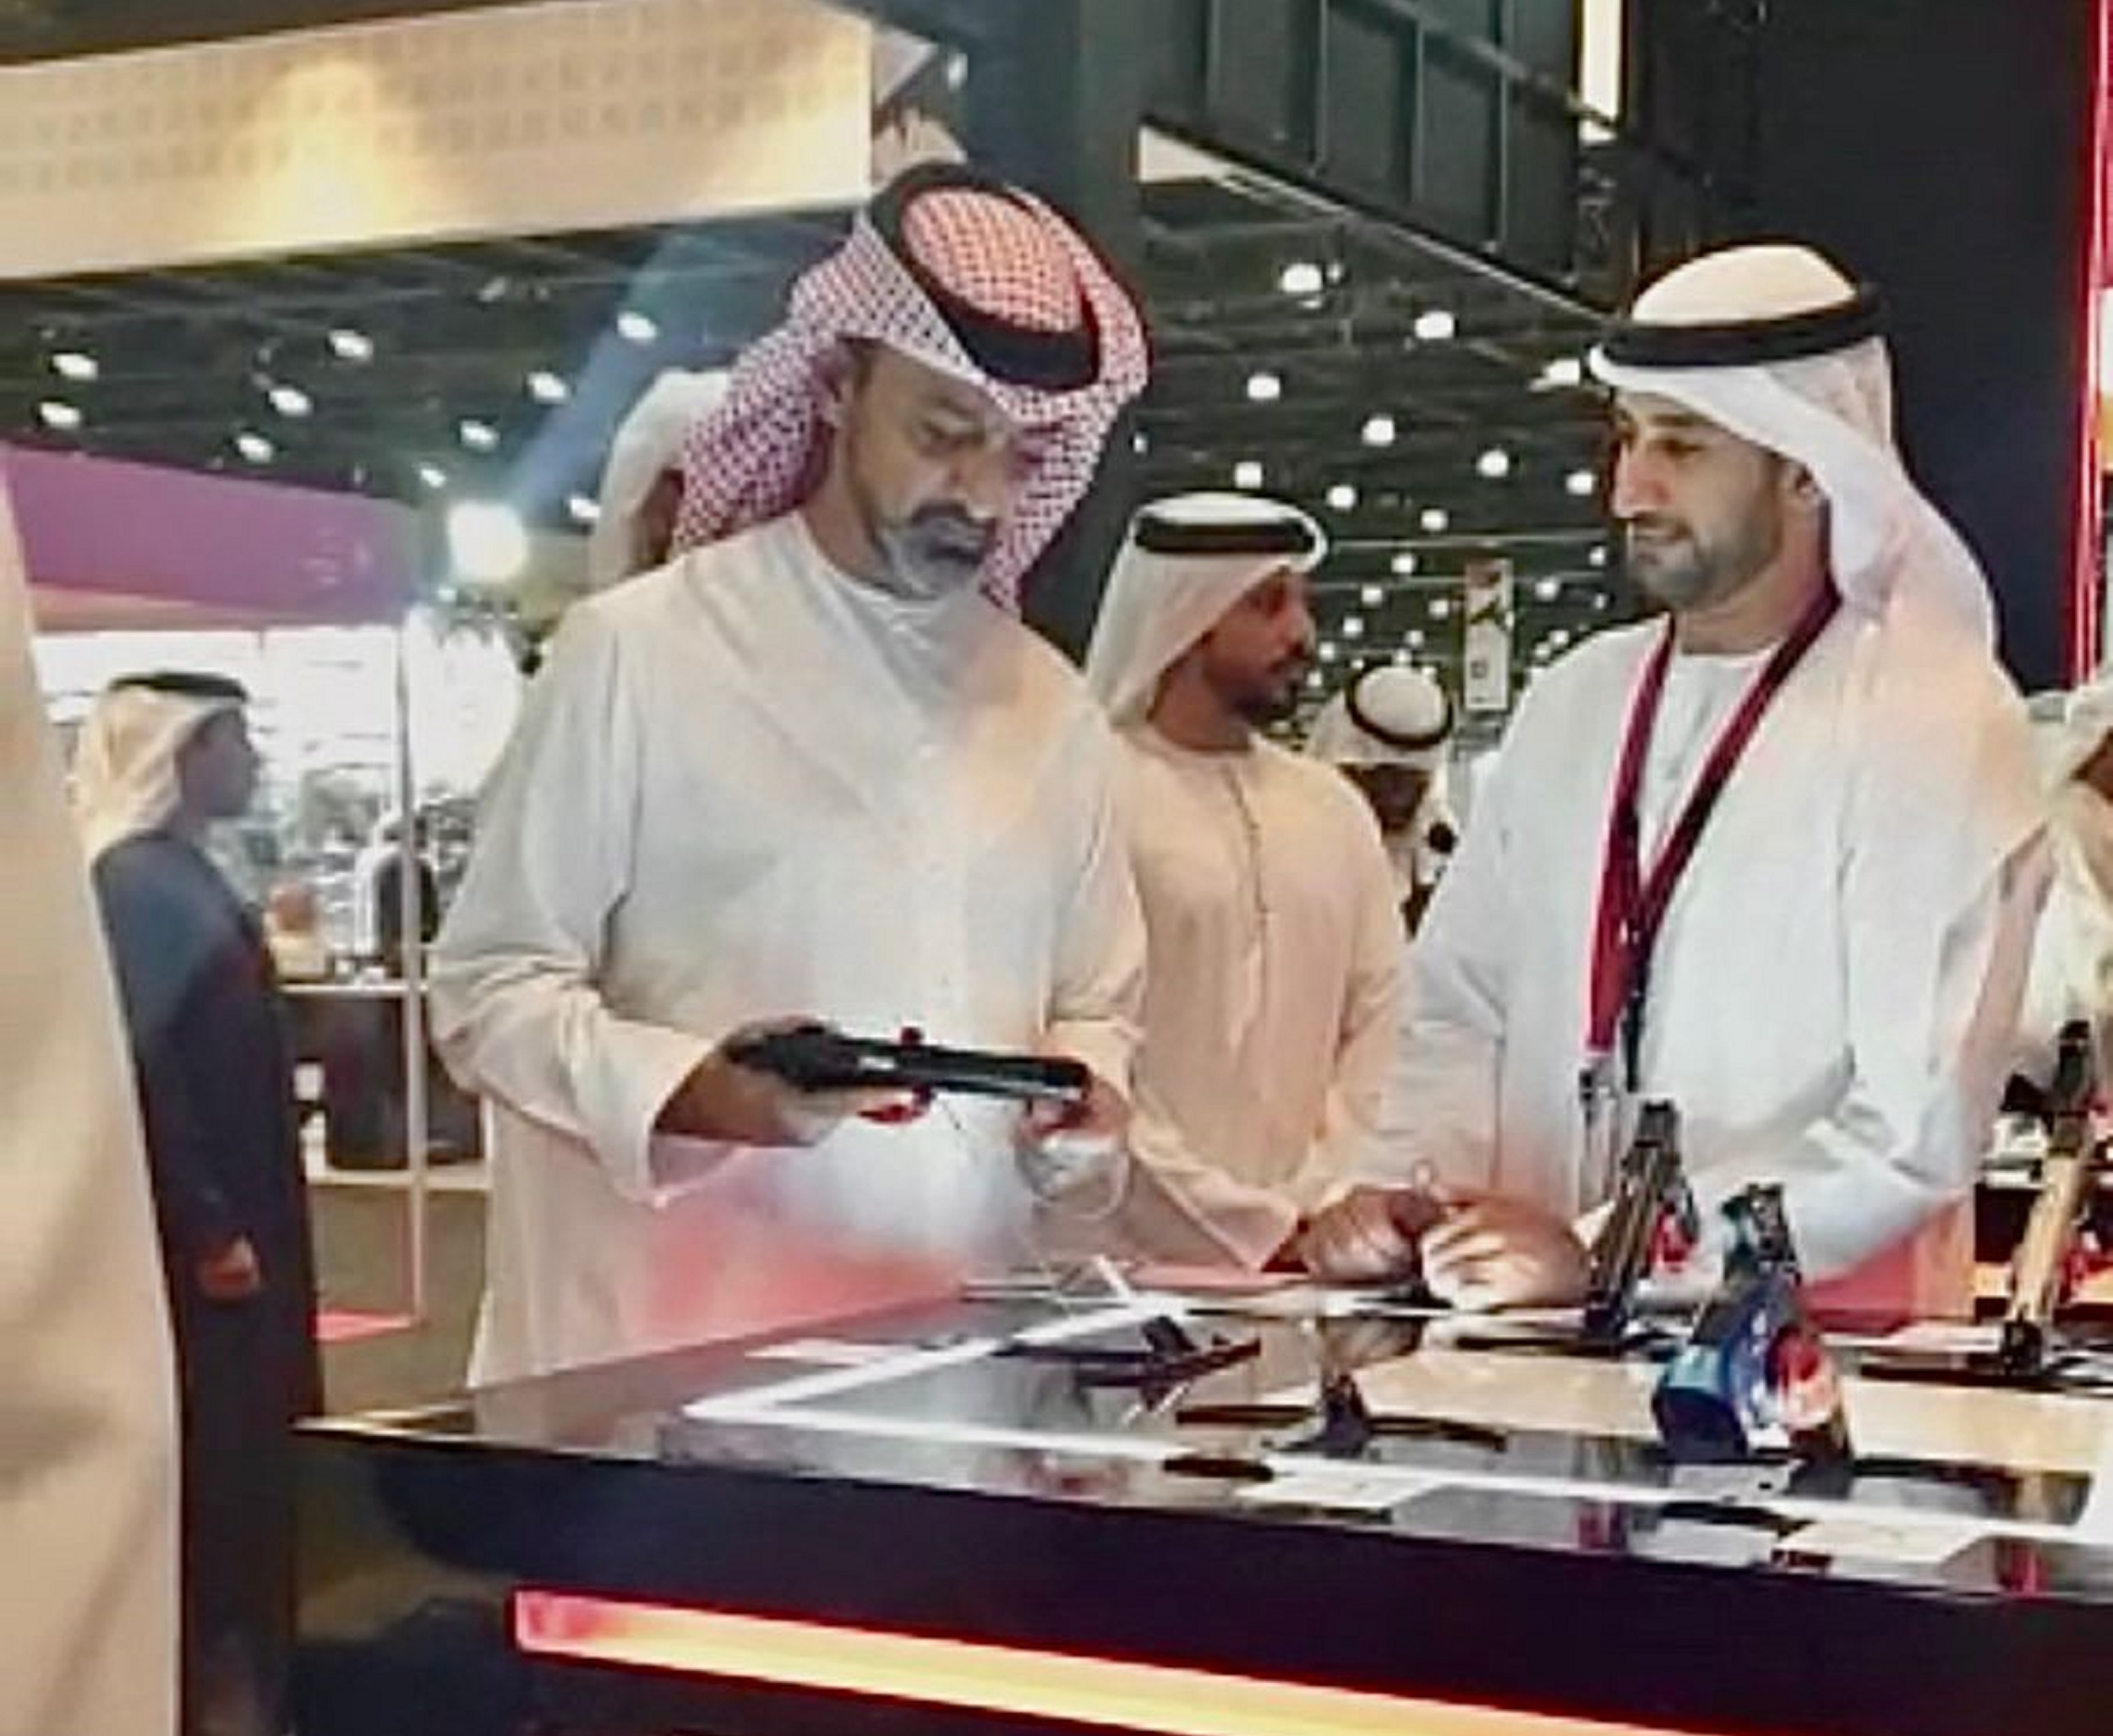 Ajman Crown Prince Came to See the Tasleeh Pavilion at the Abu Dhabi International Hunting